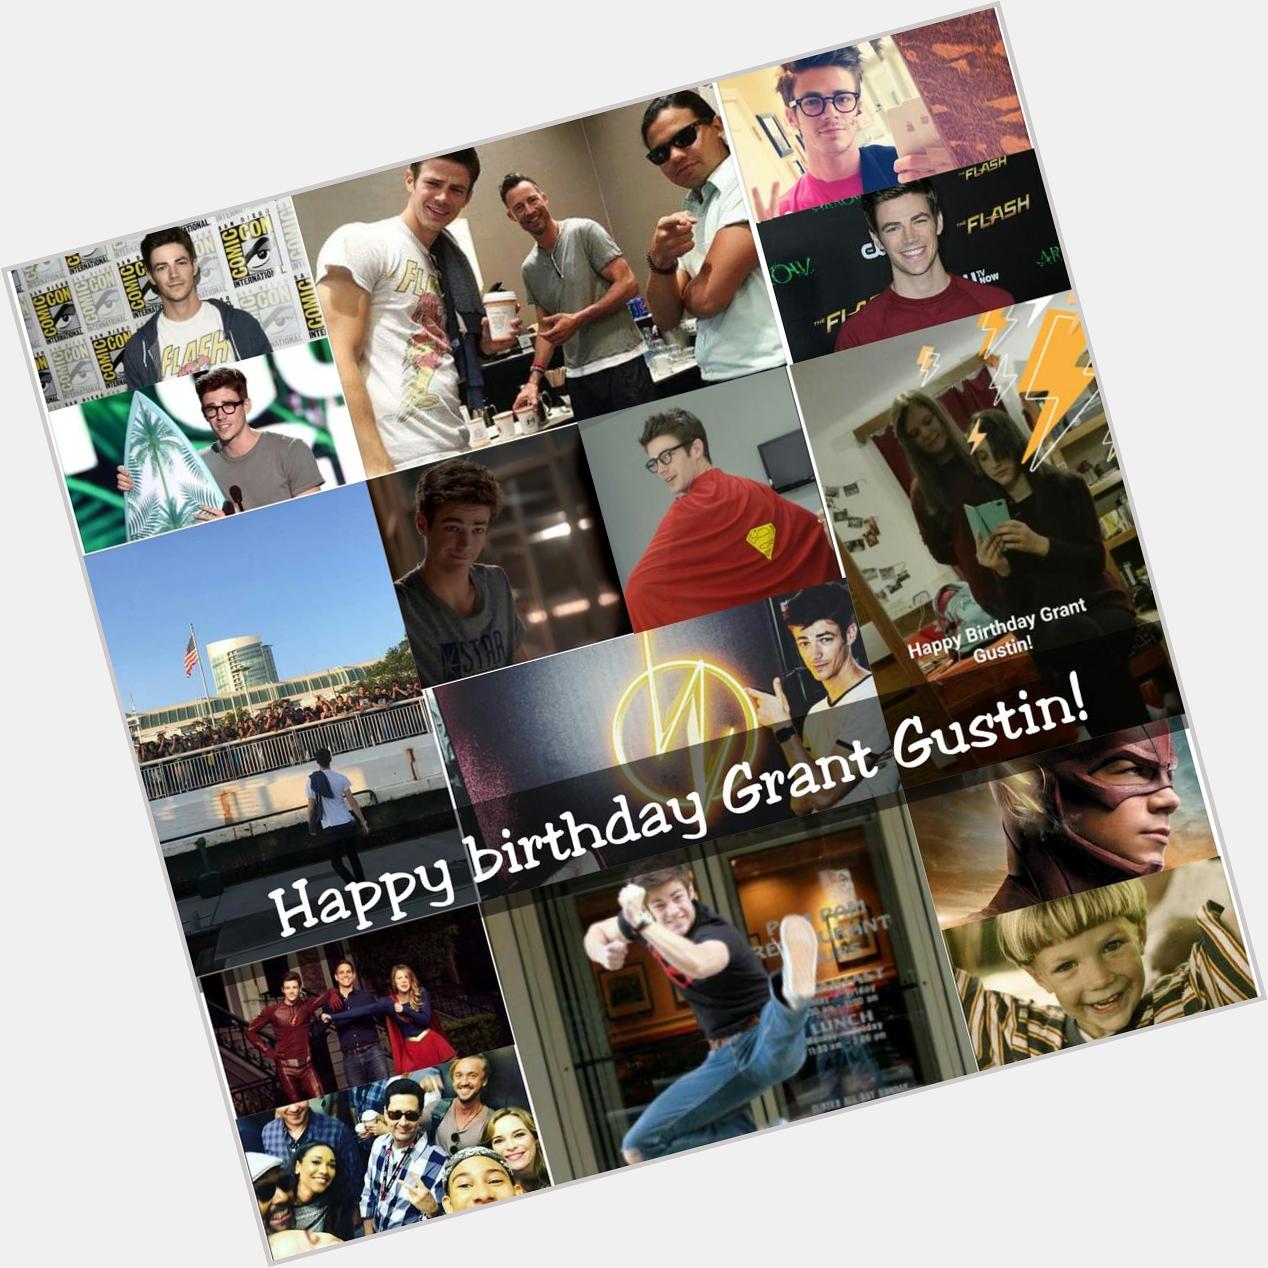 Happy birthday Grant Gustin! :-) 